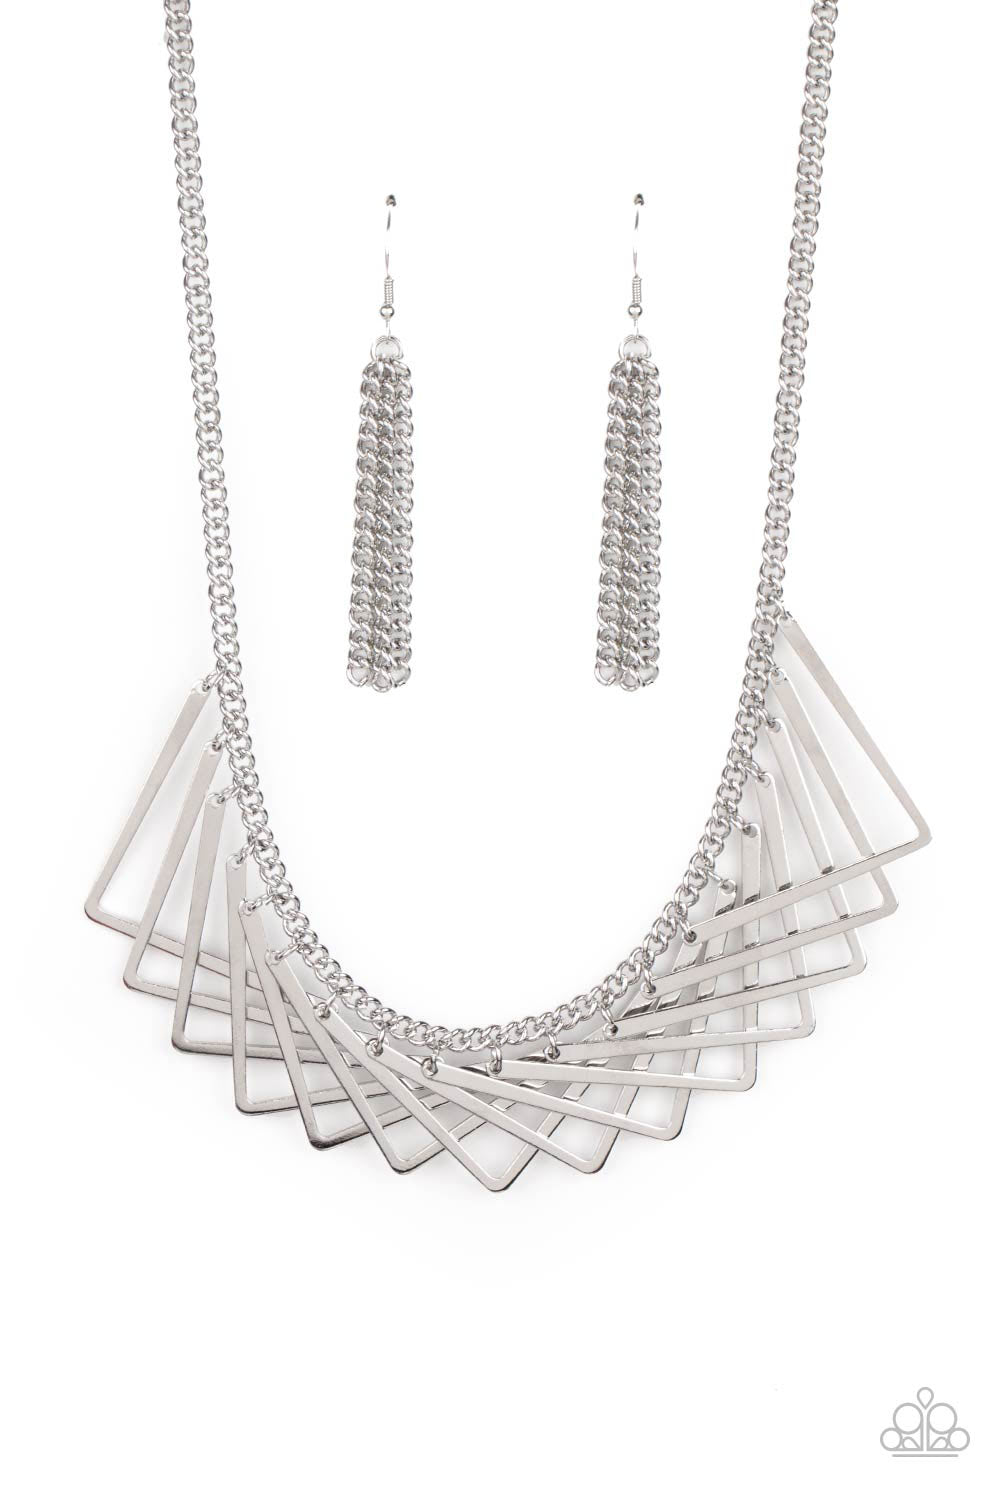 Paparazzi Accessories - Metro Mirage #N603 - Silver Necklace